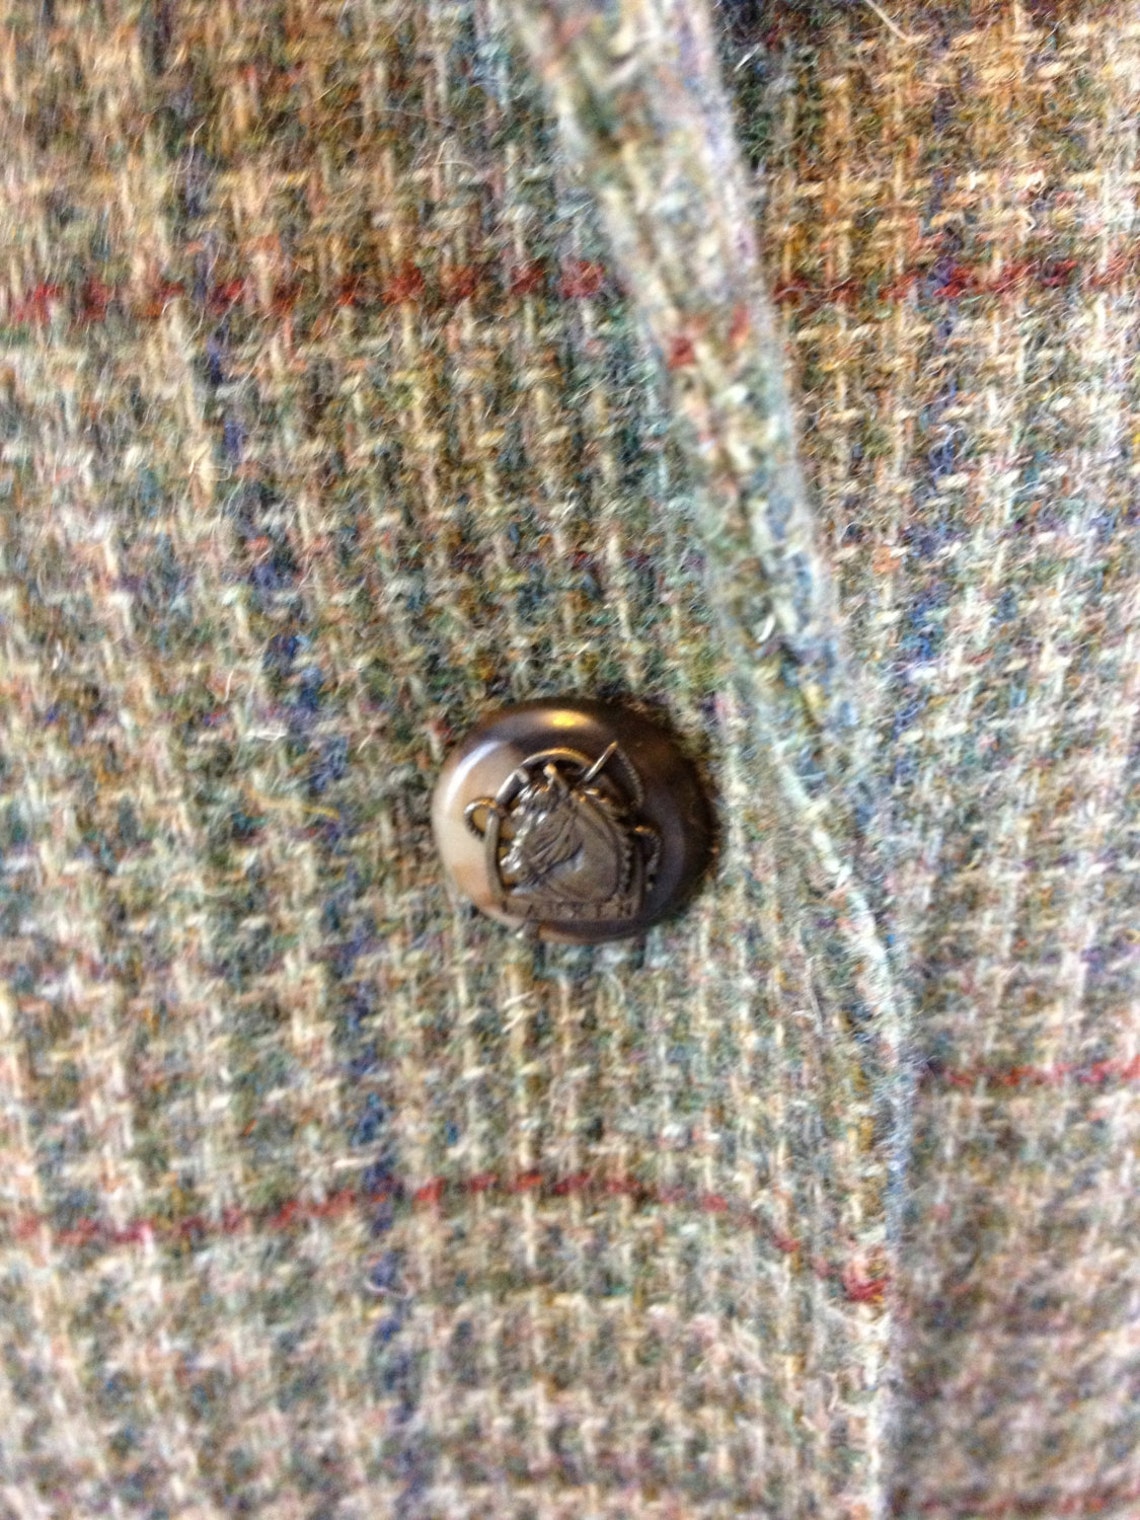 Vintage Ralph Lauren Olive Green Plaid Tweed Equestrian Jacket | Etsy